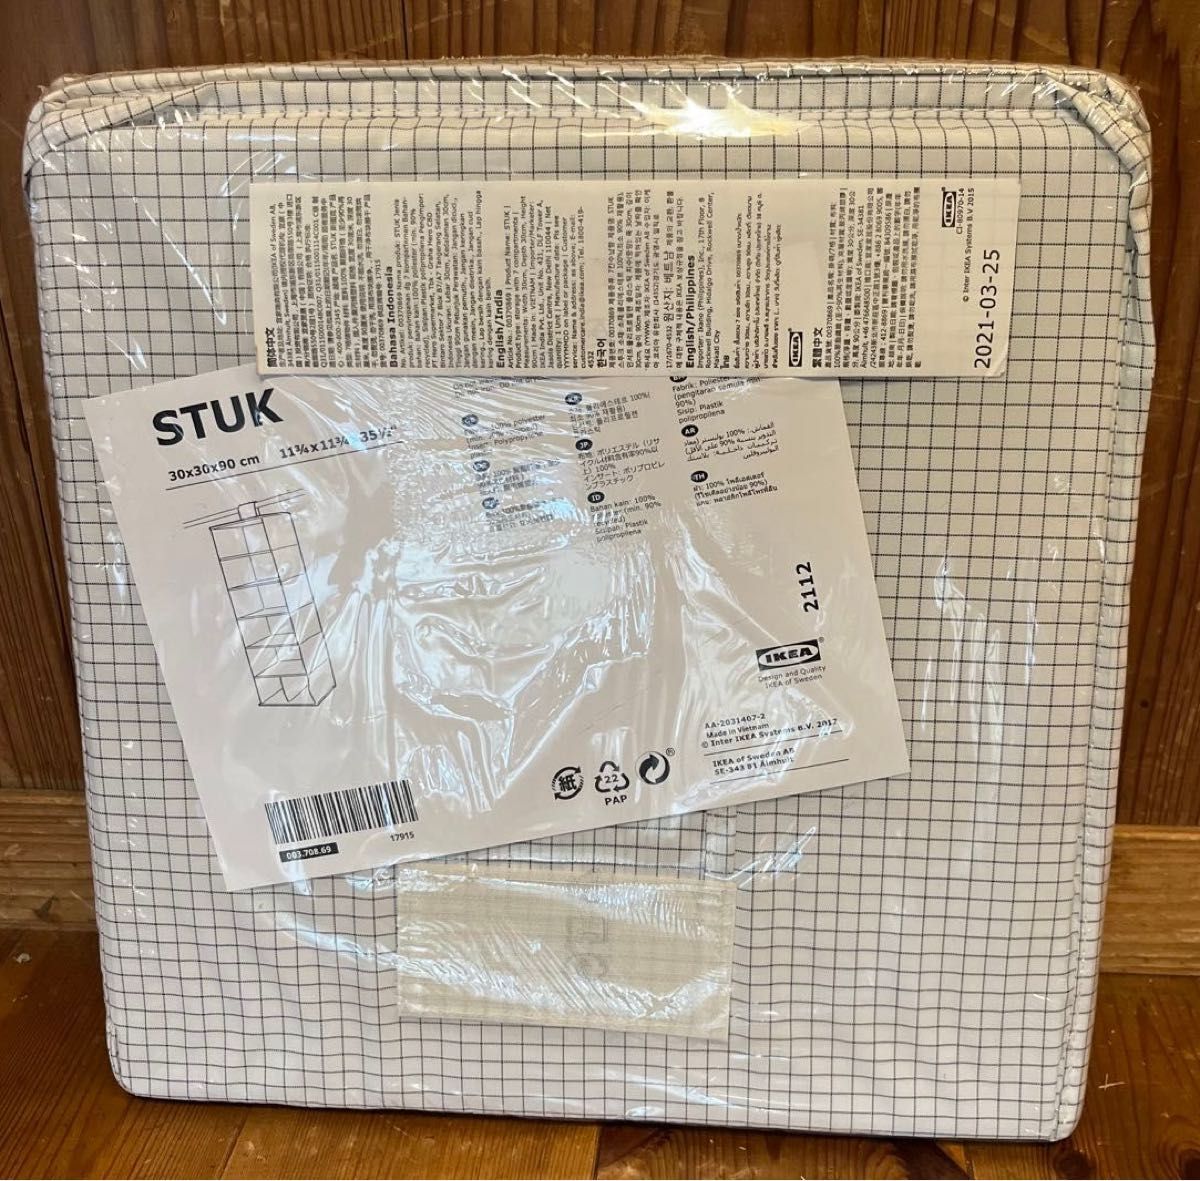 IKEA STUK イケア　ストゥーク　ハンガーラック用ハンギング収納　